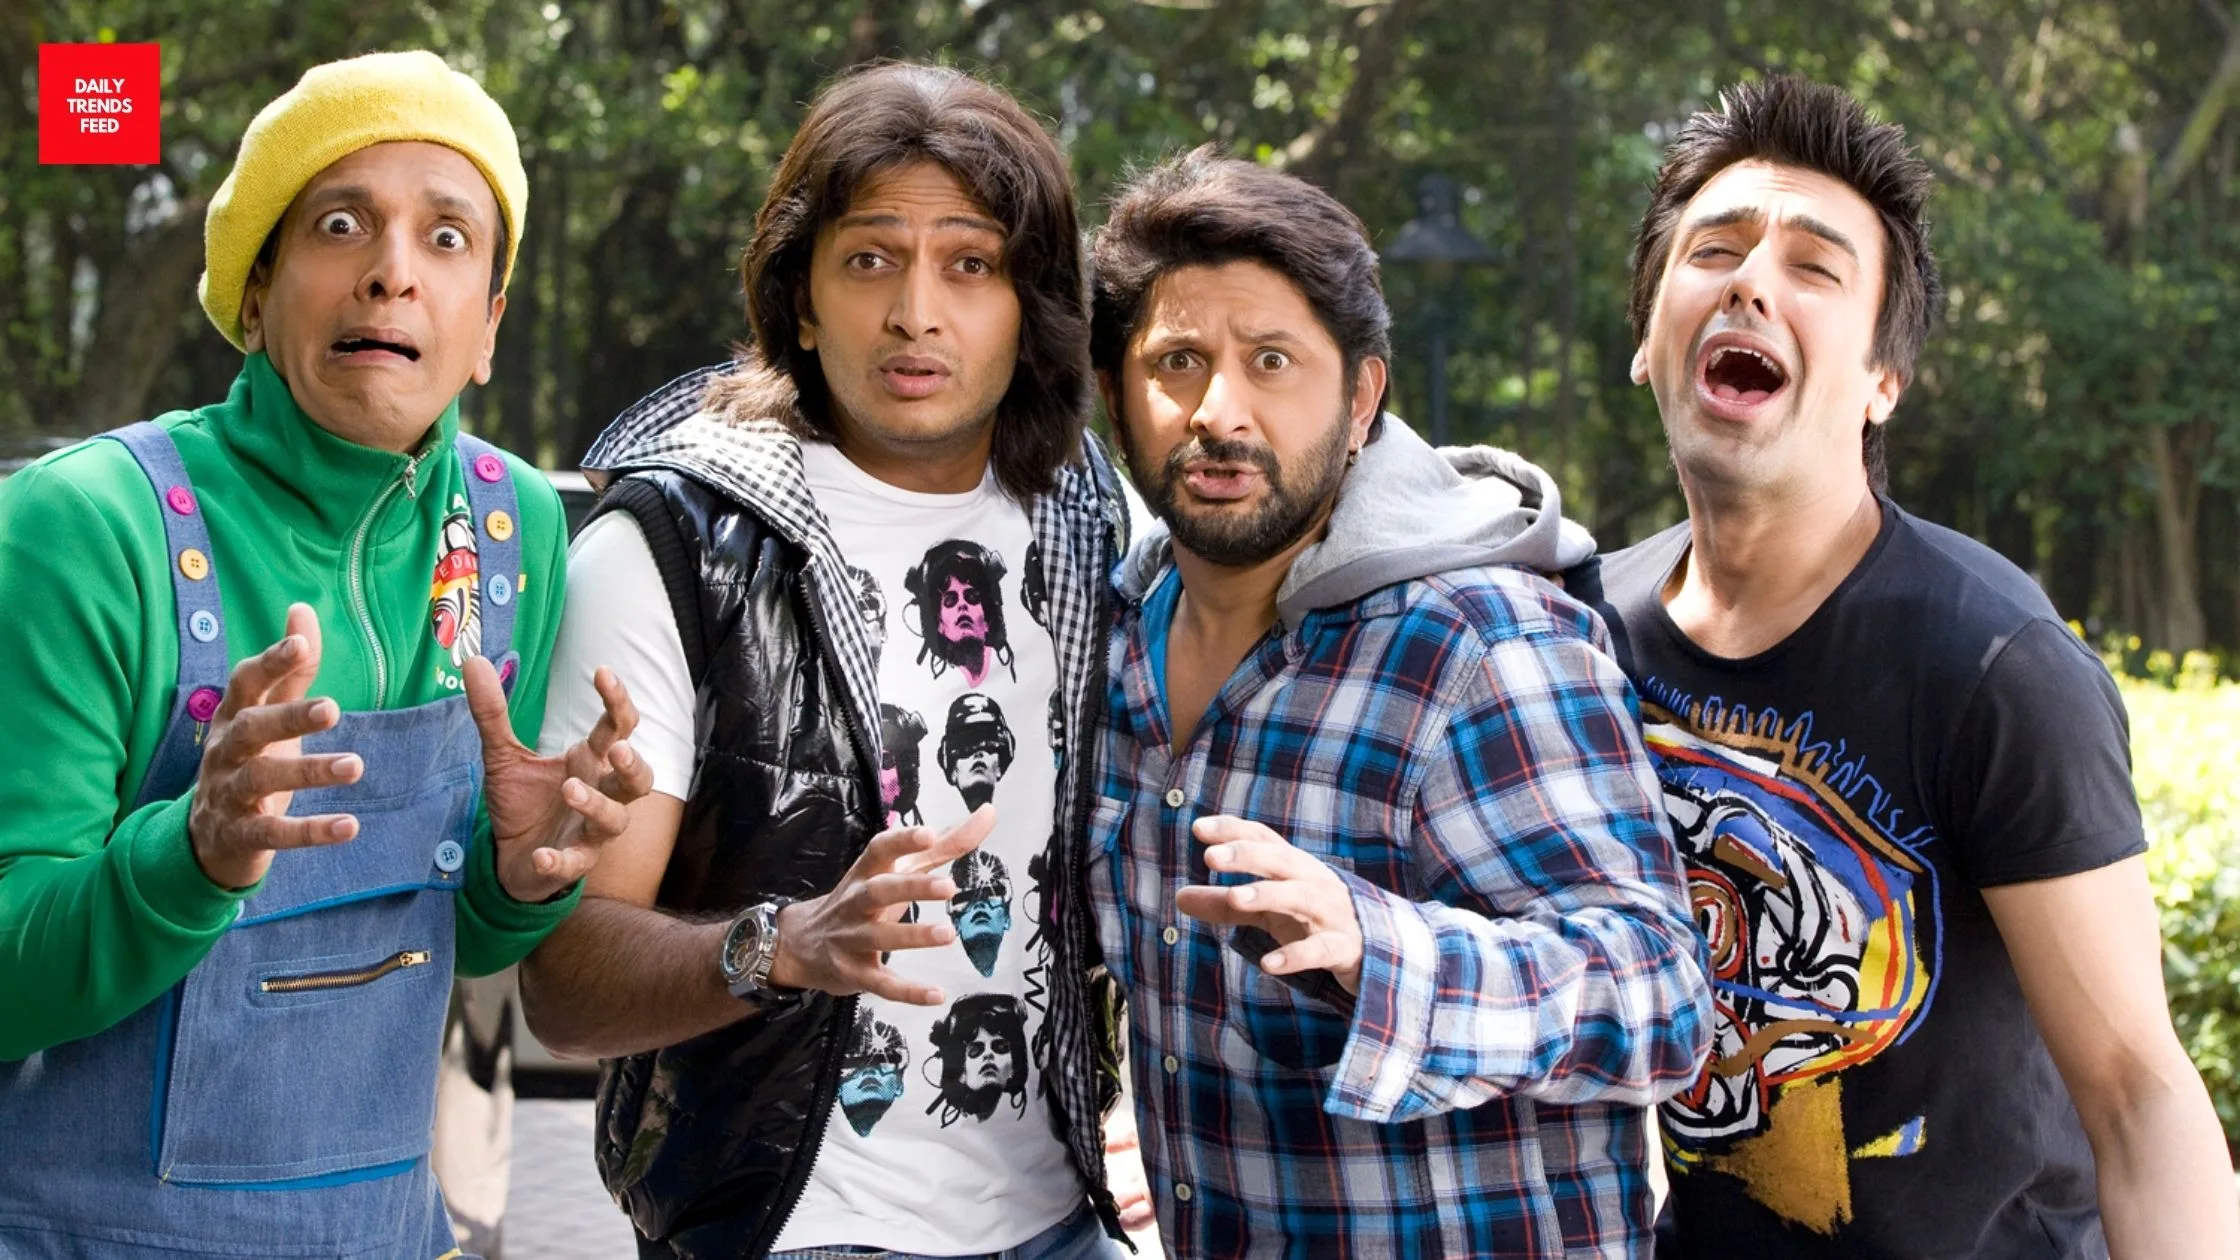 Comedy Hindi Movies On Amazon Prime: Dhamaal